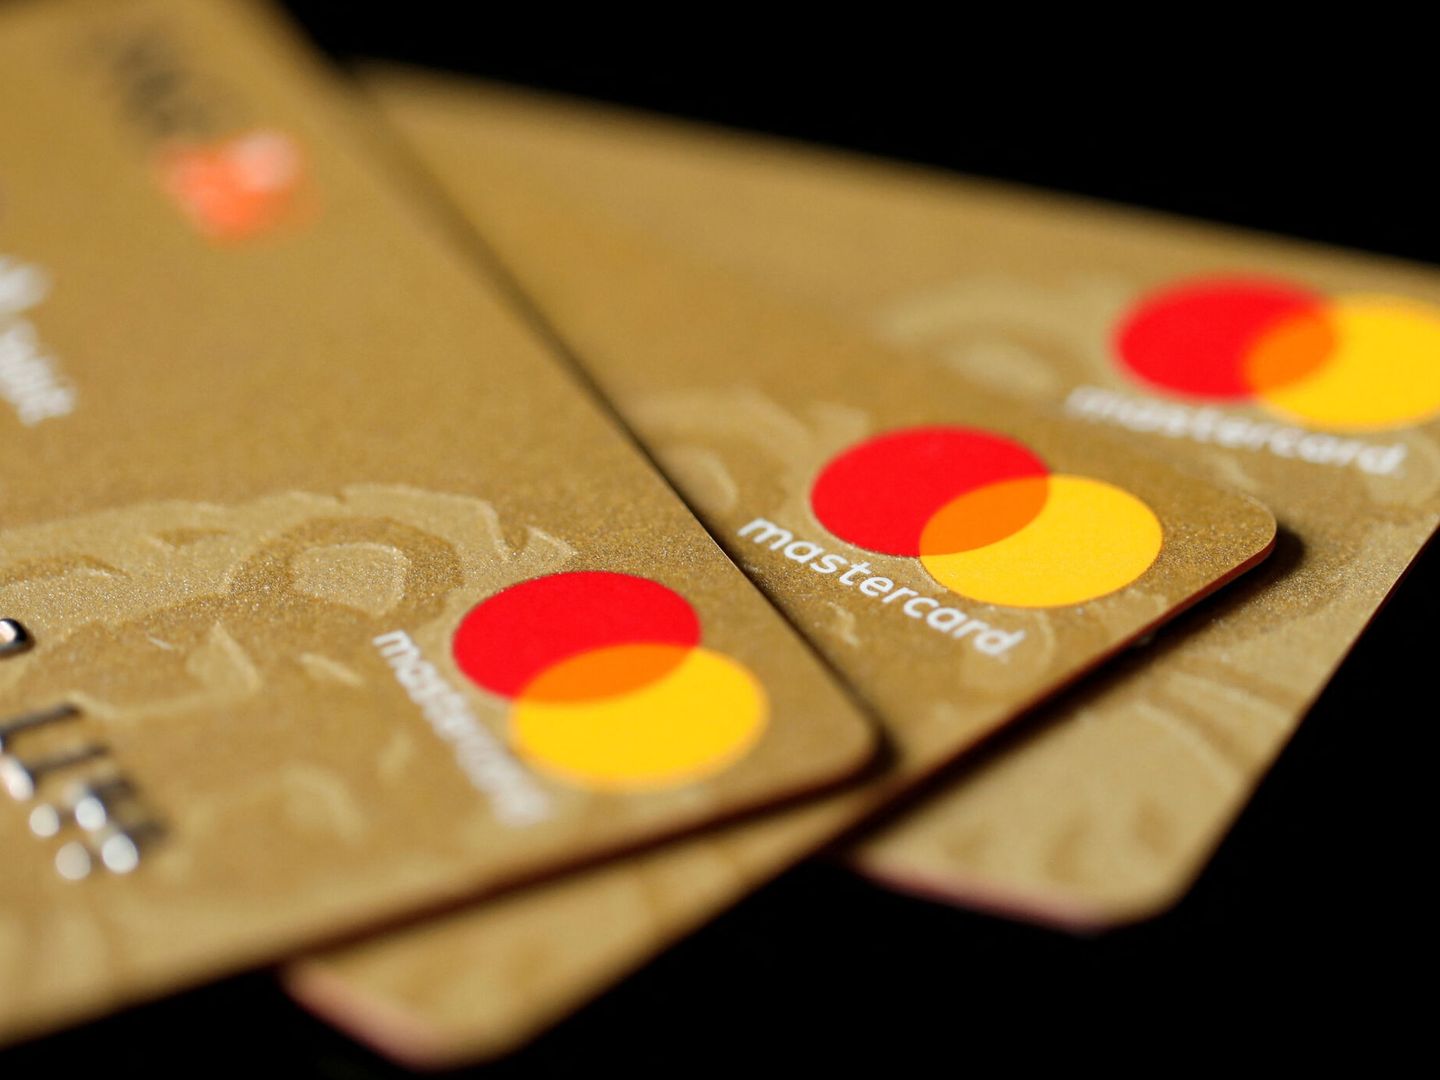 Tarjetas de crédito de Mastercard. (Reuters/Benoit Tessier)